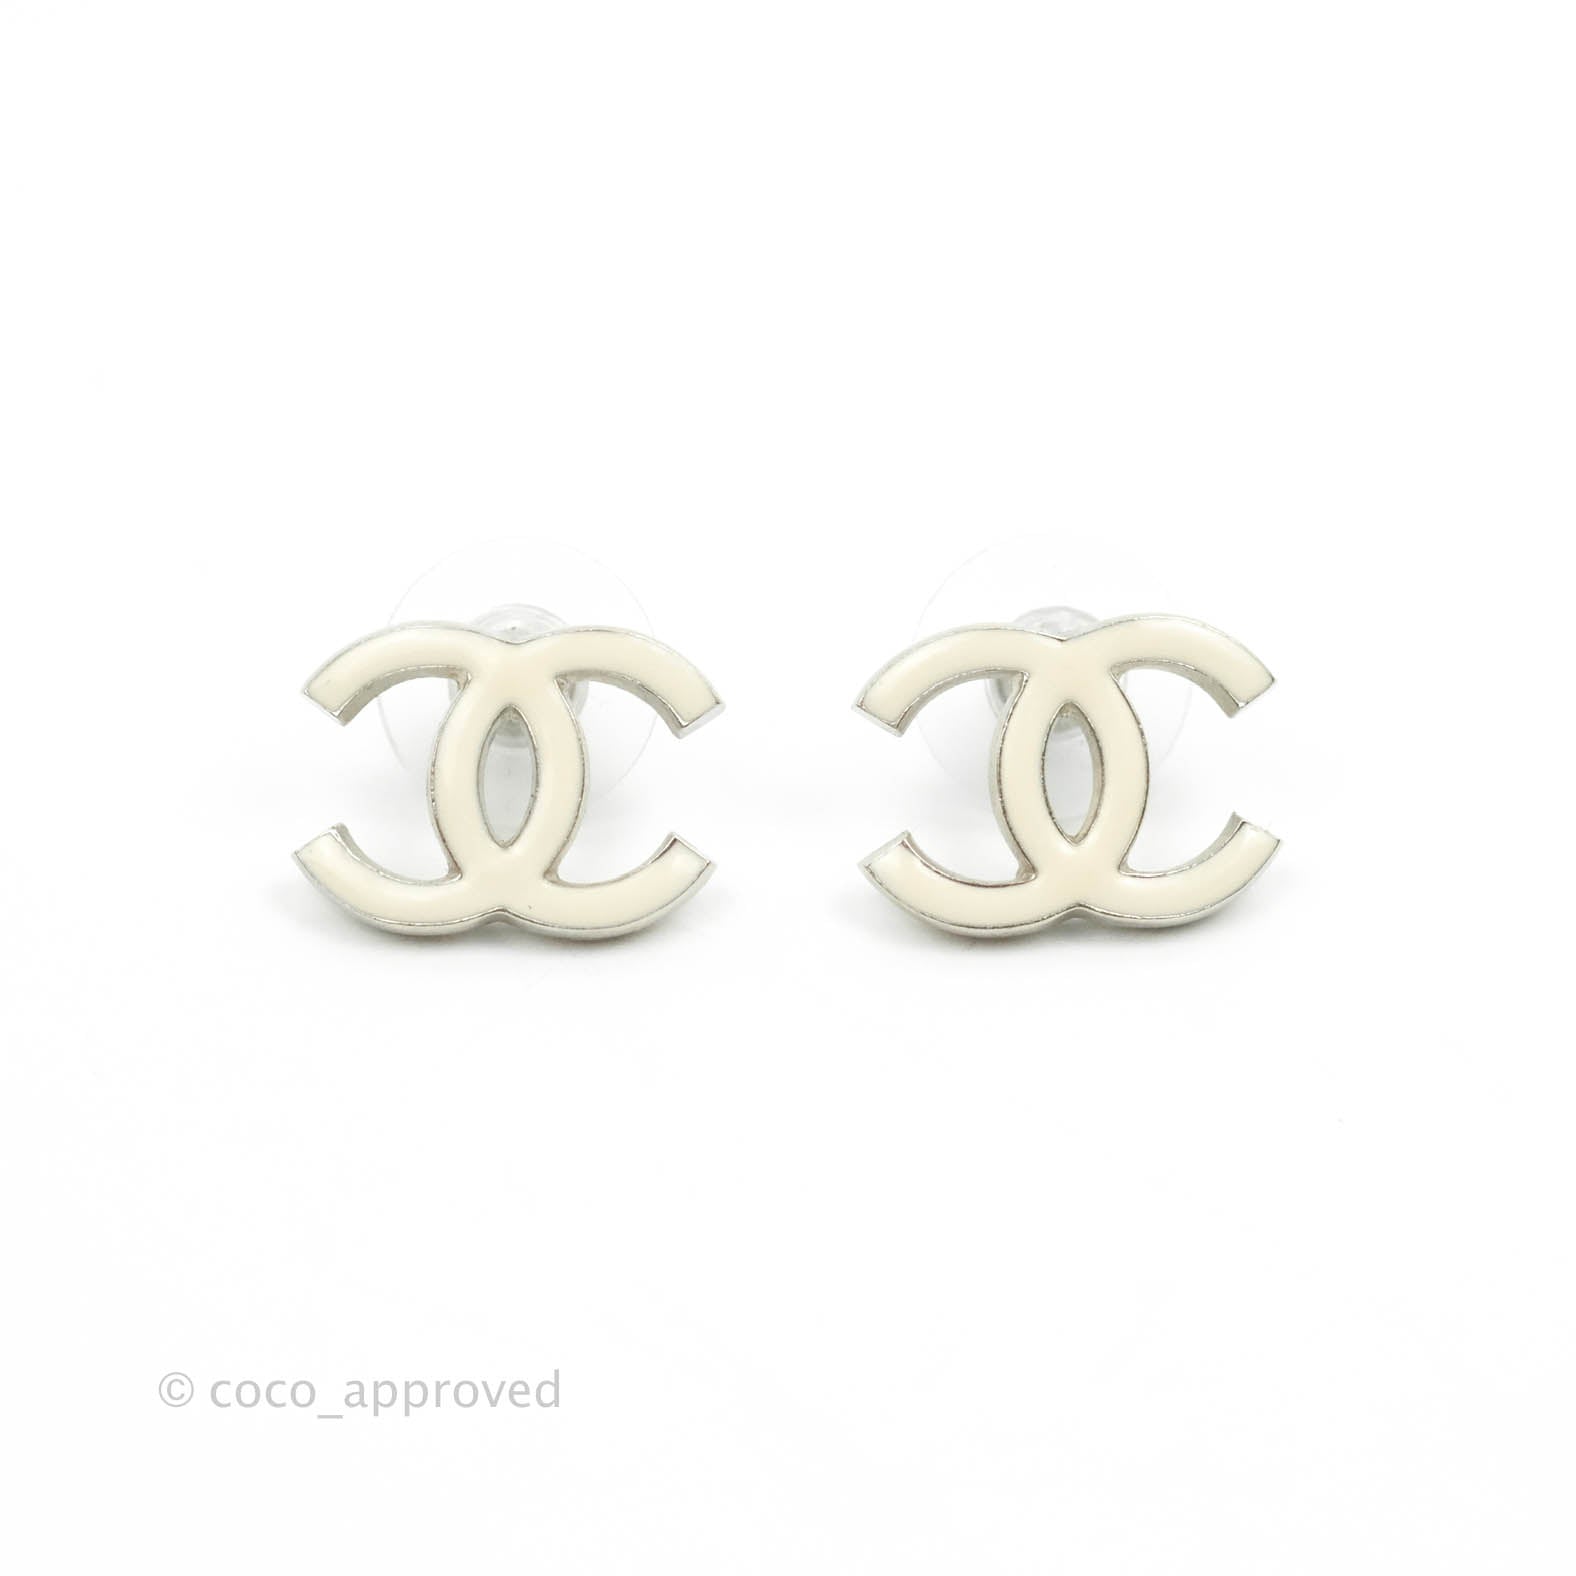 Double C Earrings 10K Gold / White